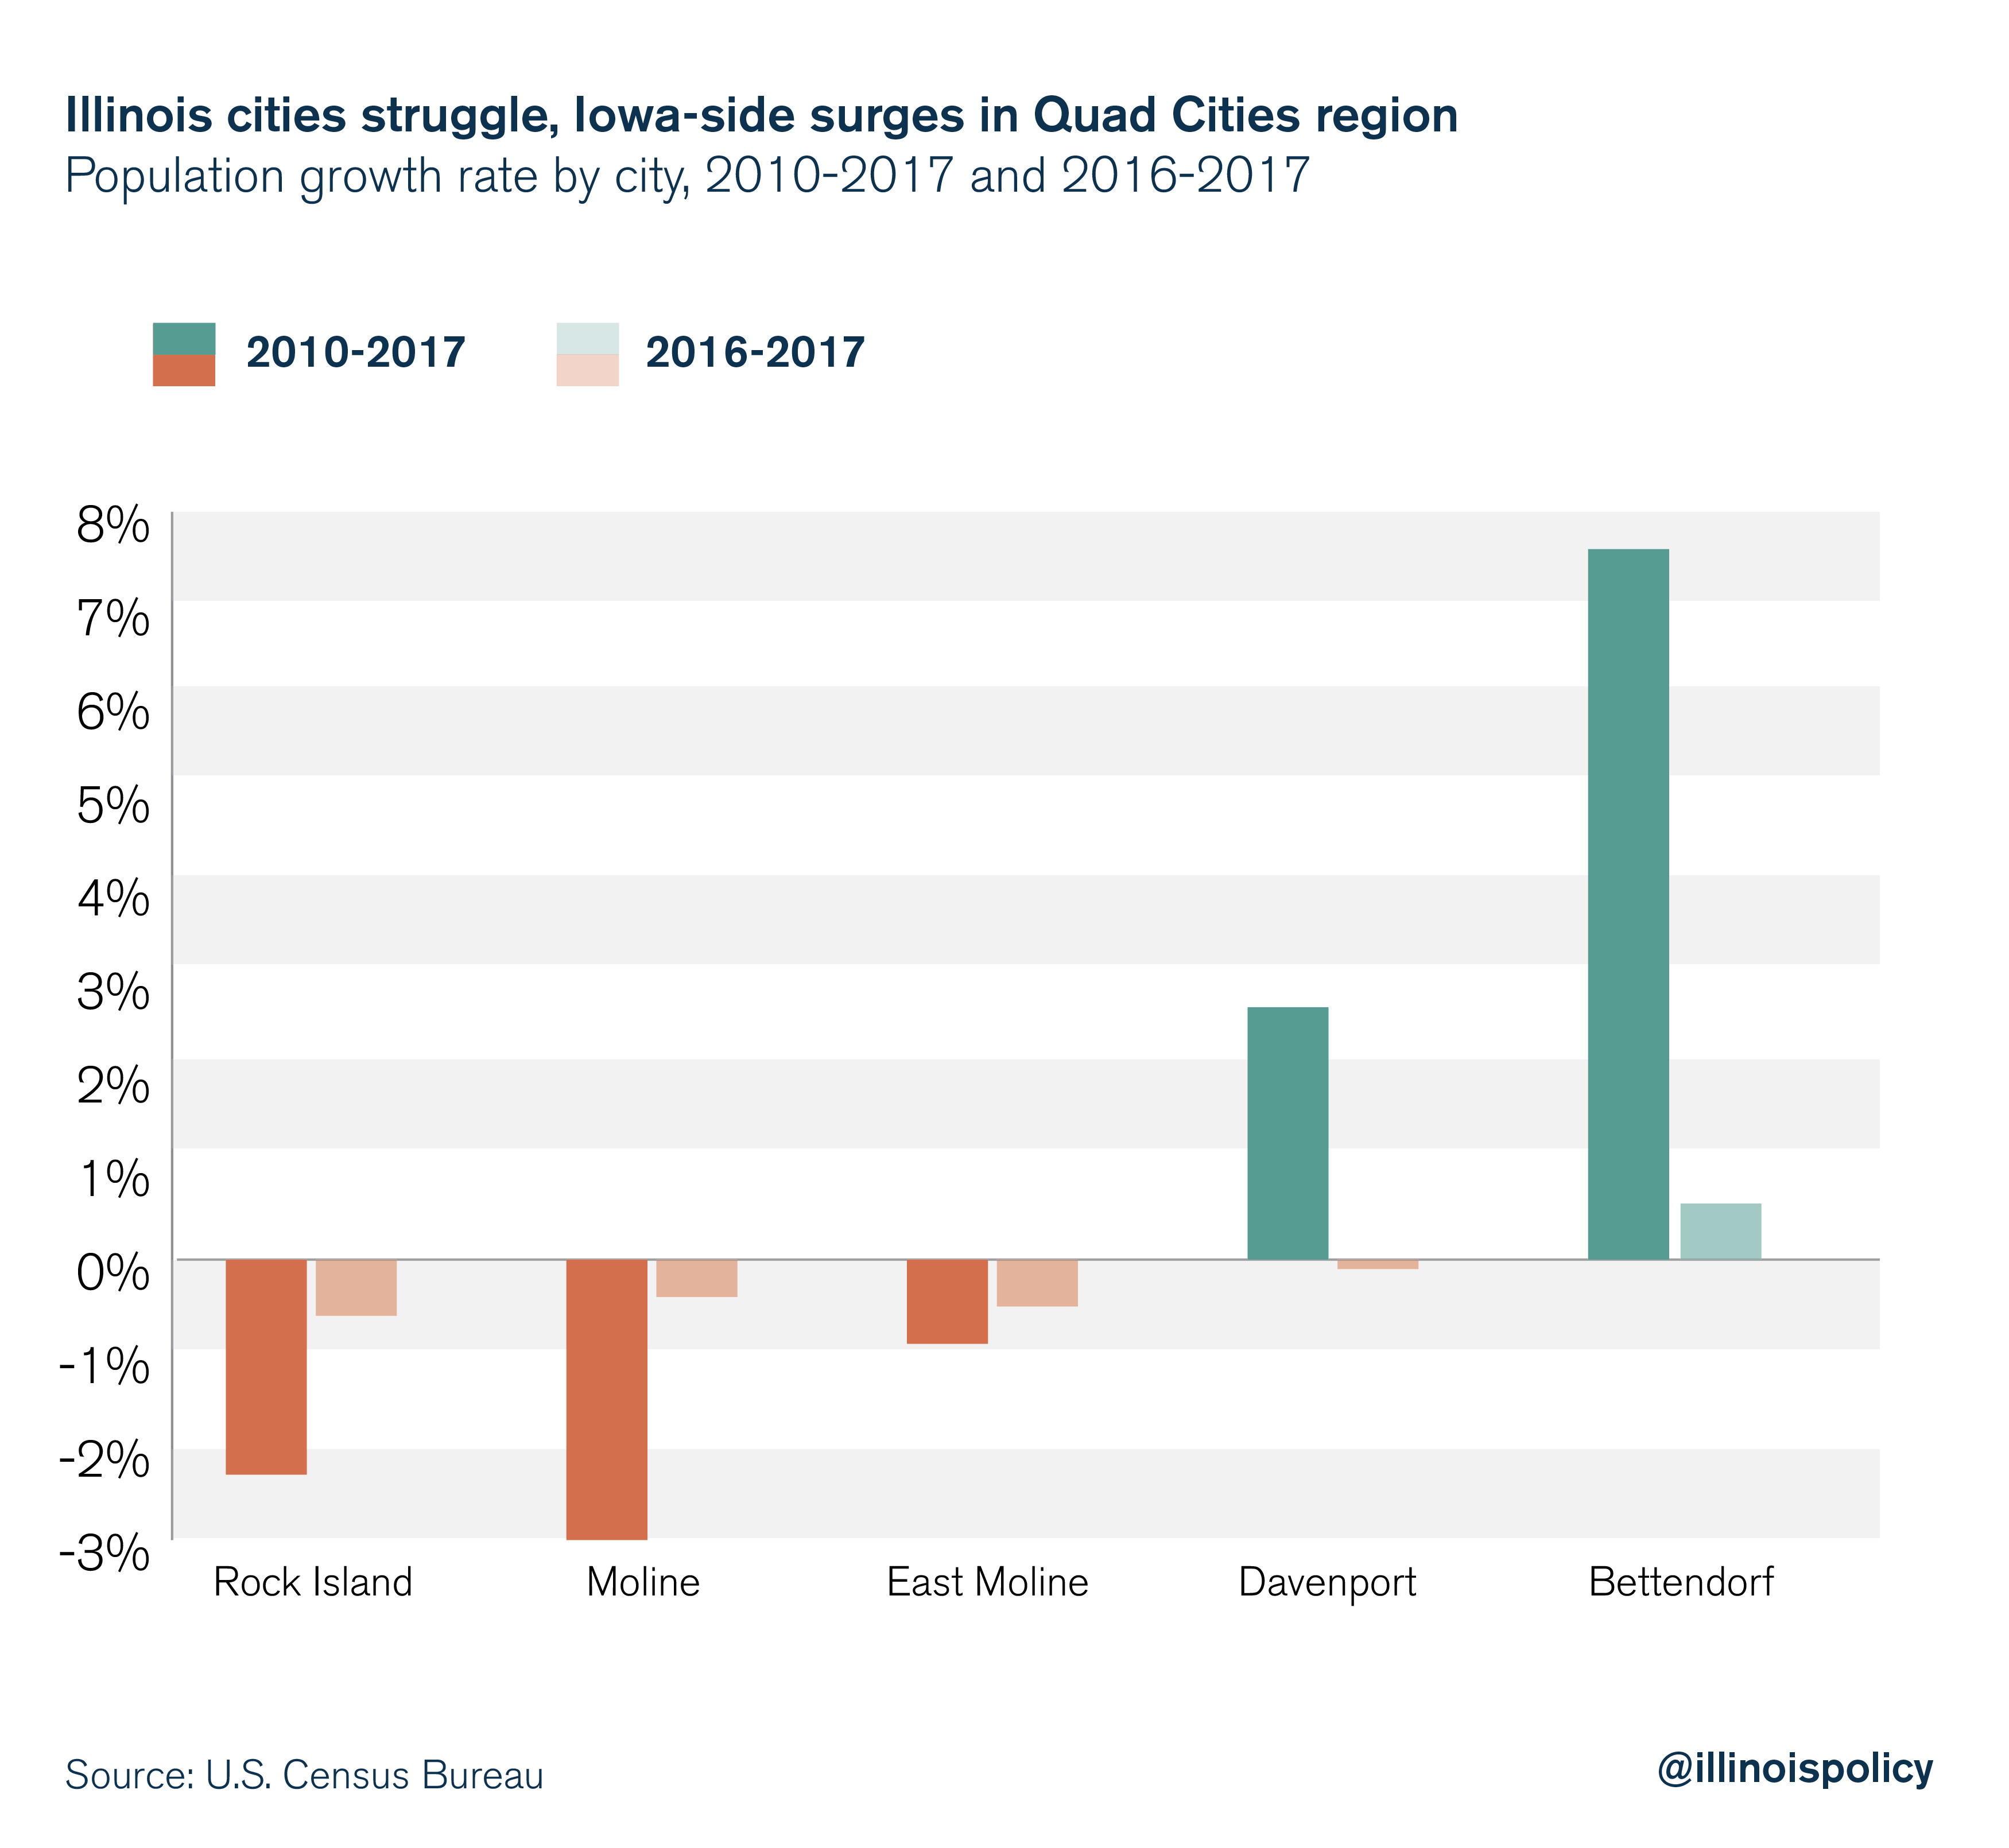 Illinois cities struggle, Iowa-side surges in Quad Cities region